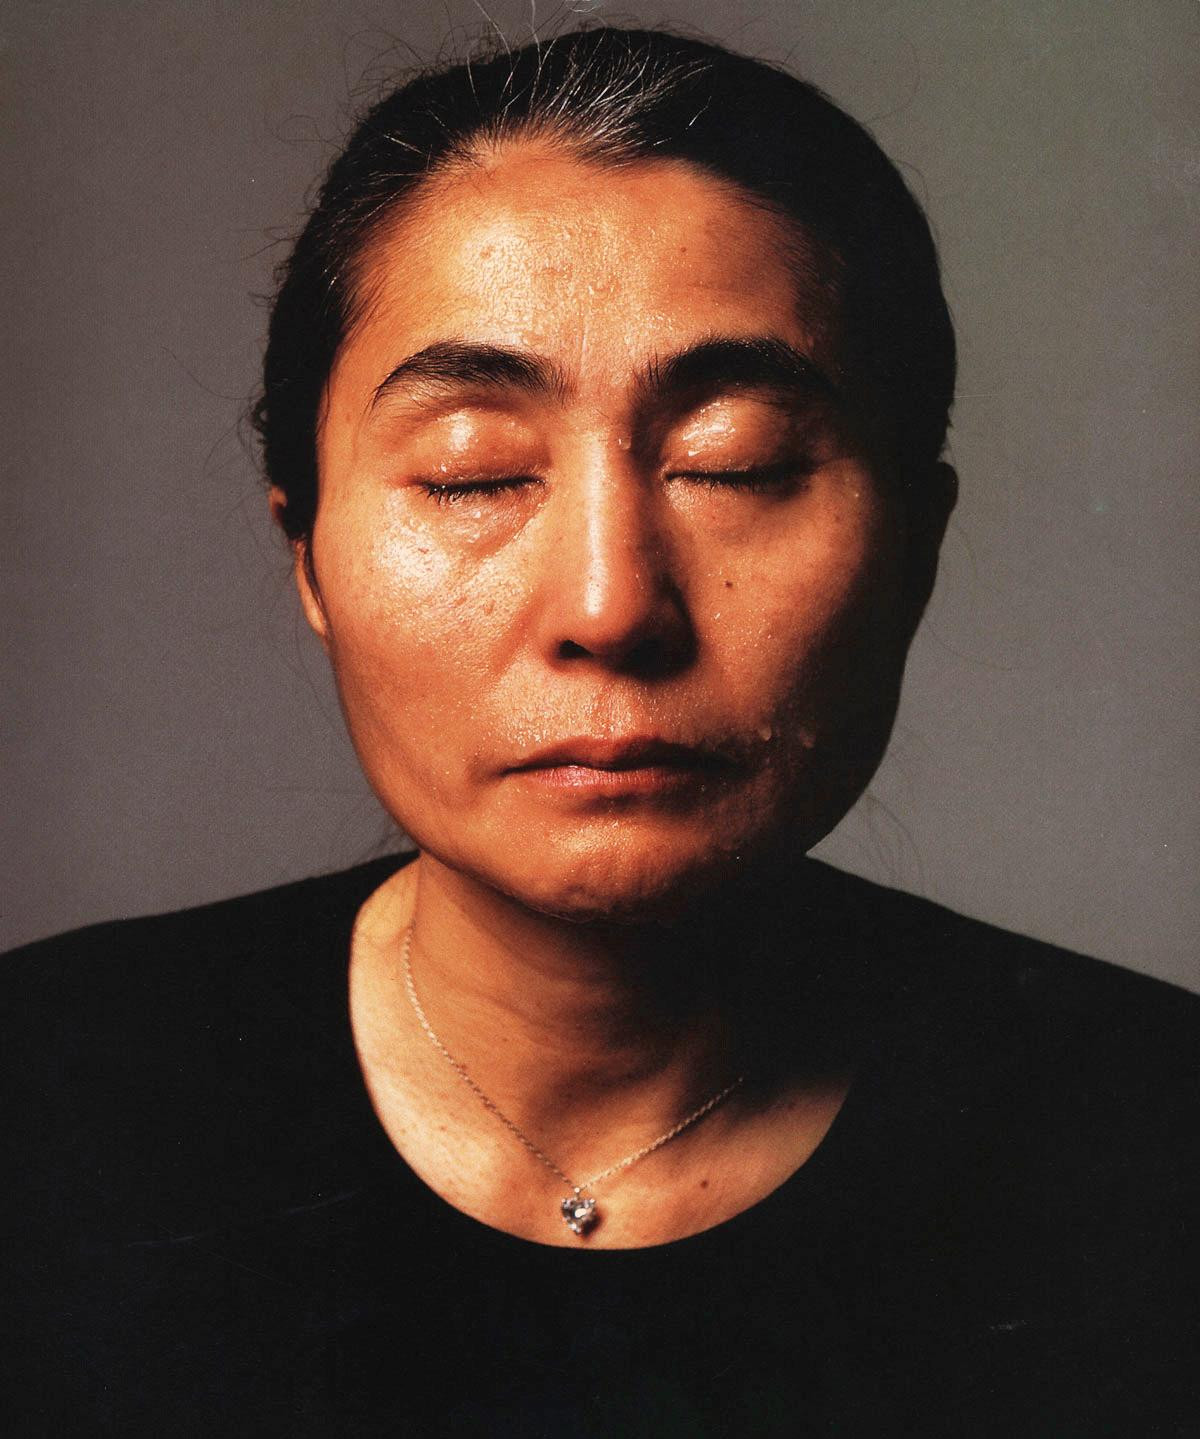 Йоко Оно (Yoko Ono)